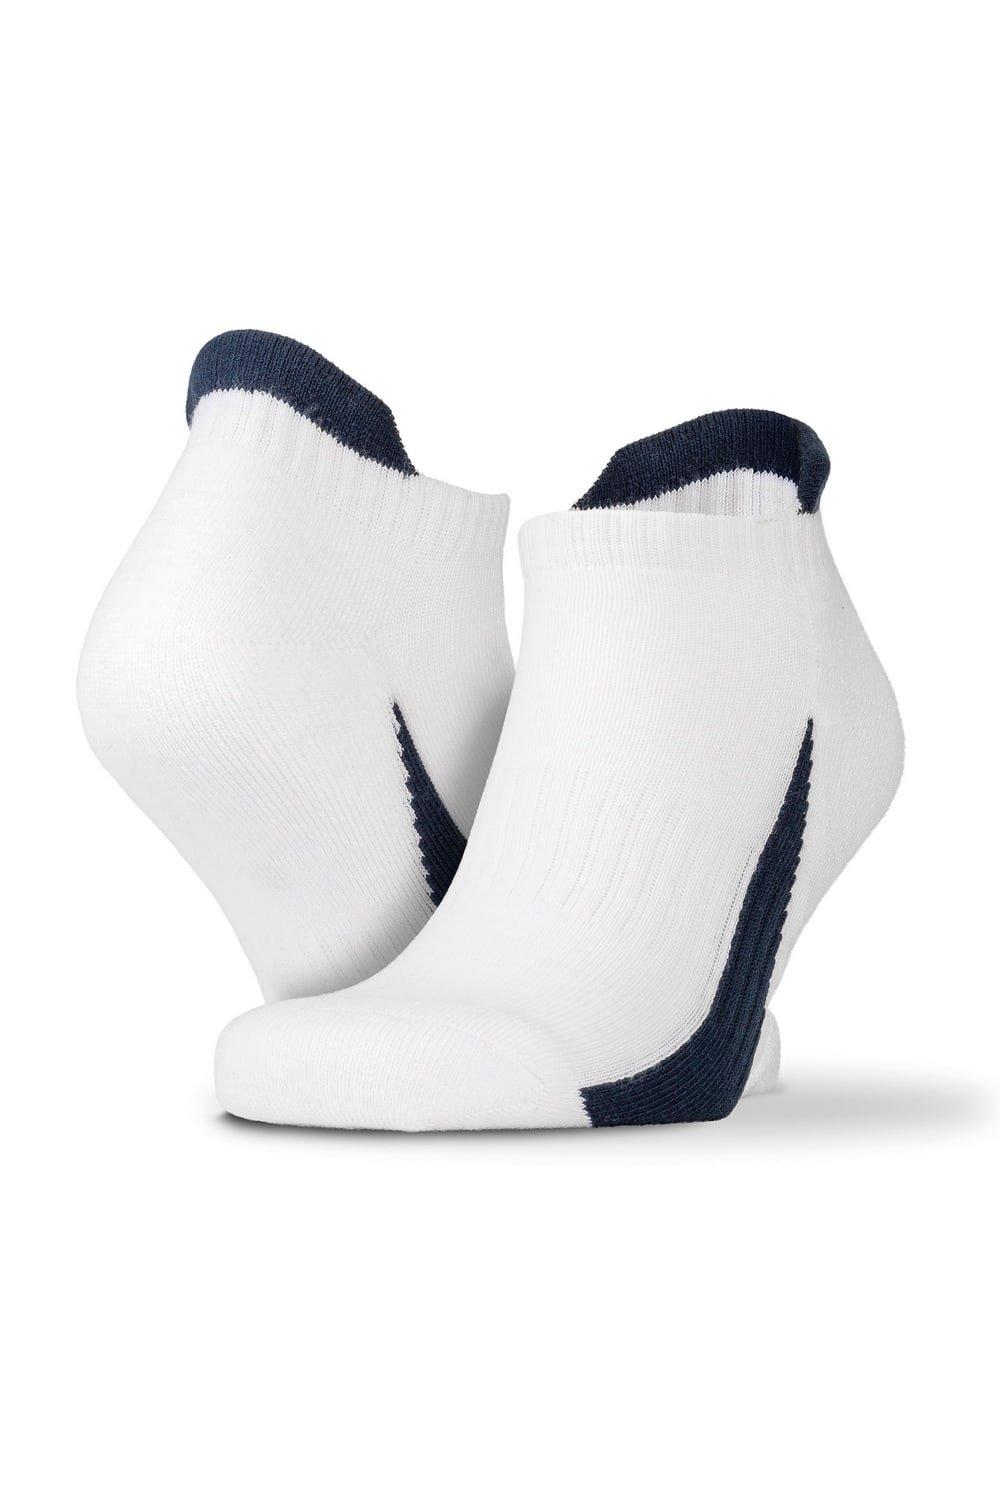 Sports Trainer Socks (Pack Of 3)